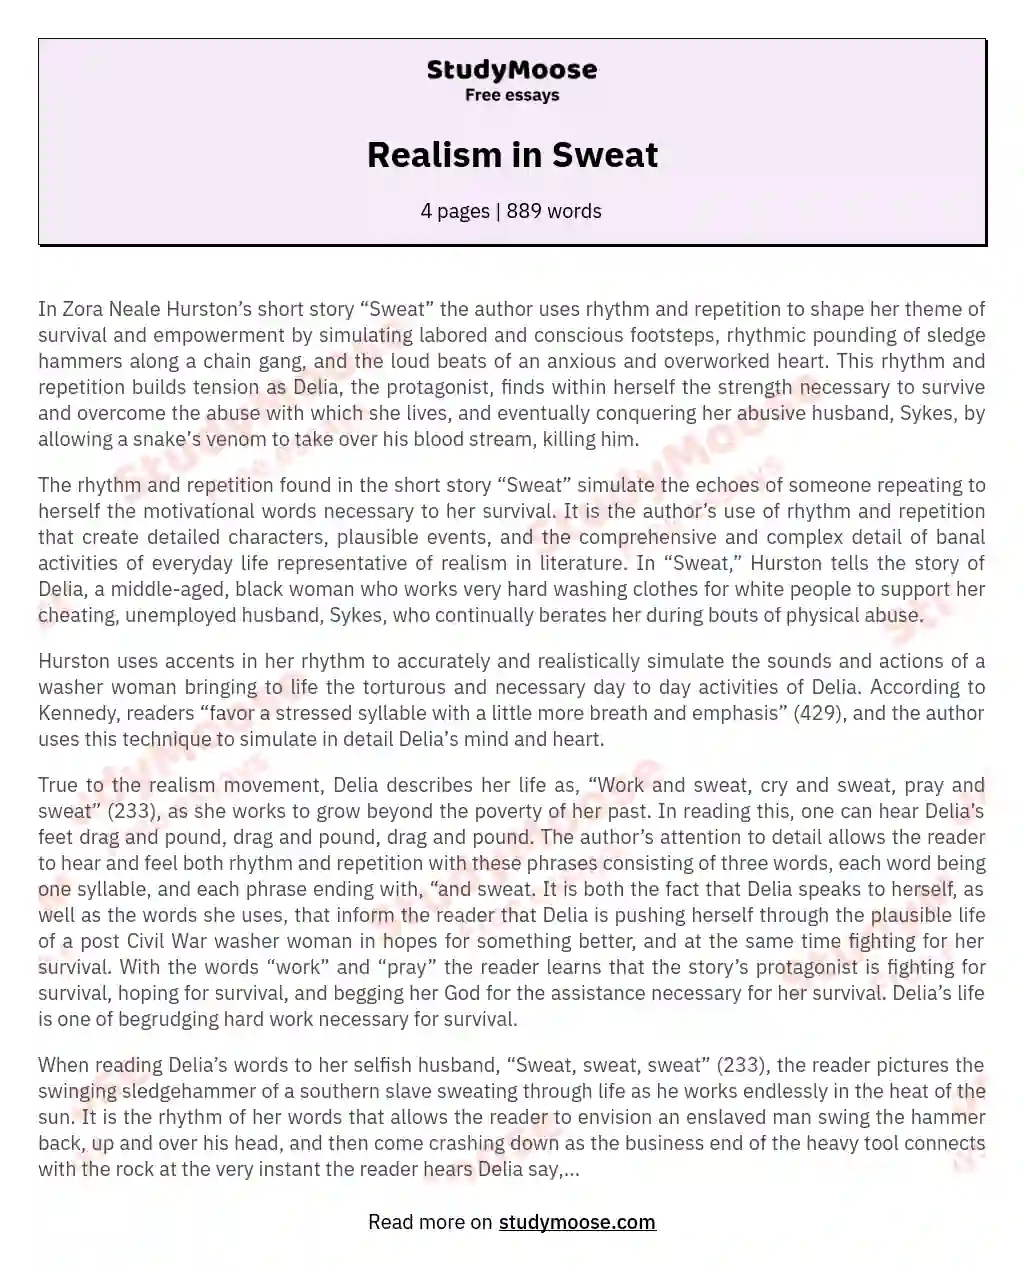 Realism in Sweat essay